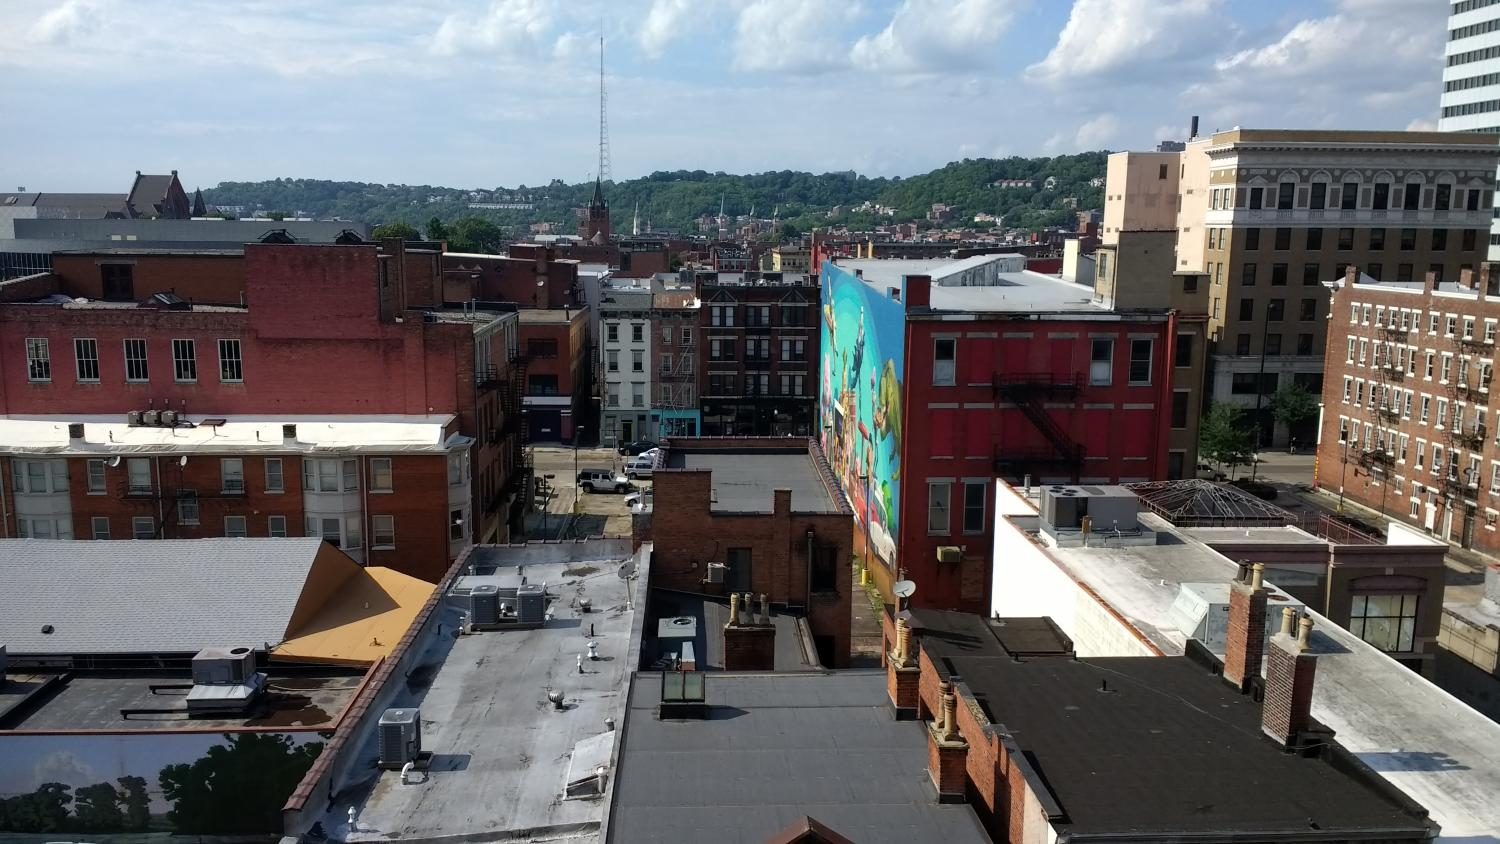 The rooftops of downtown Cincinnati.